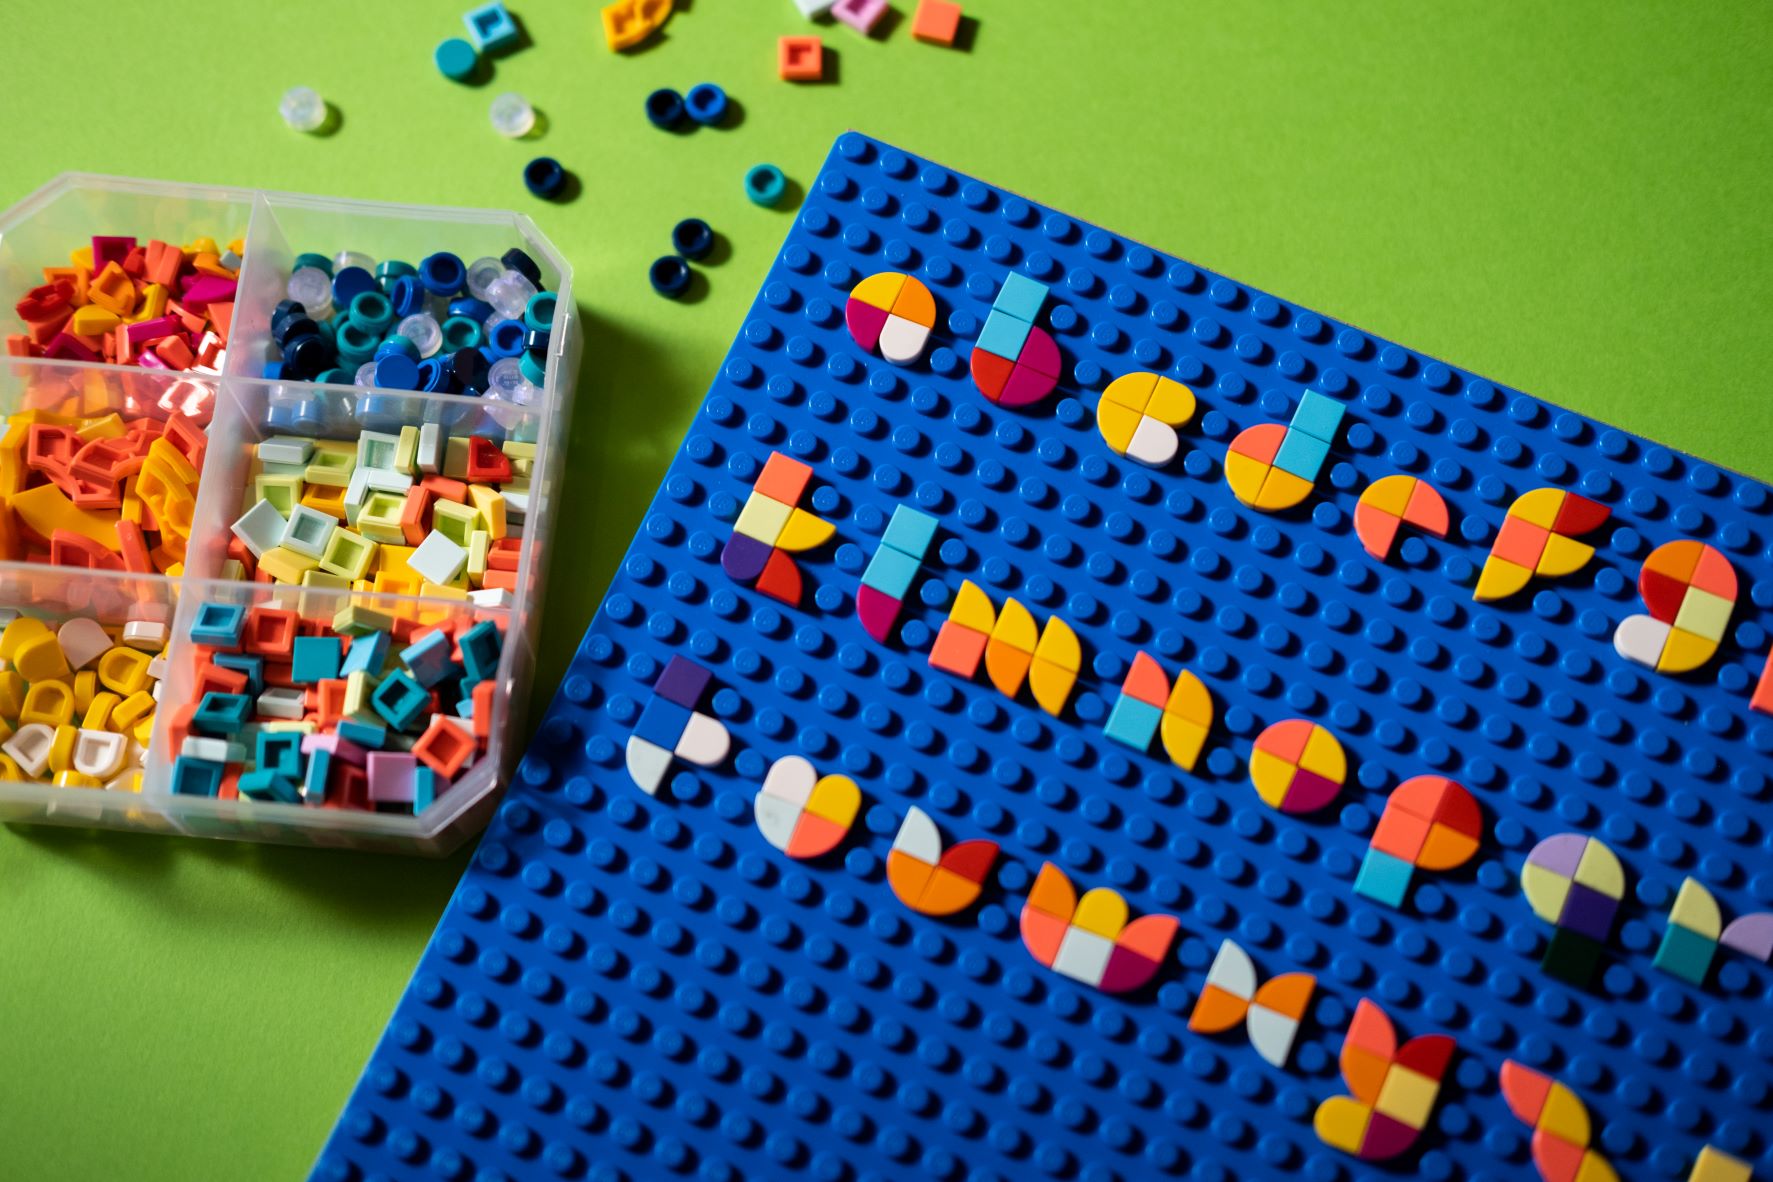 Lego Build a Print Workshop